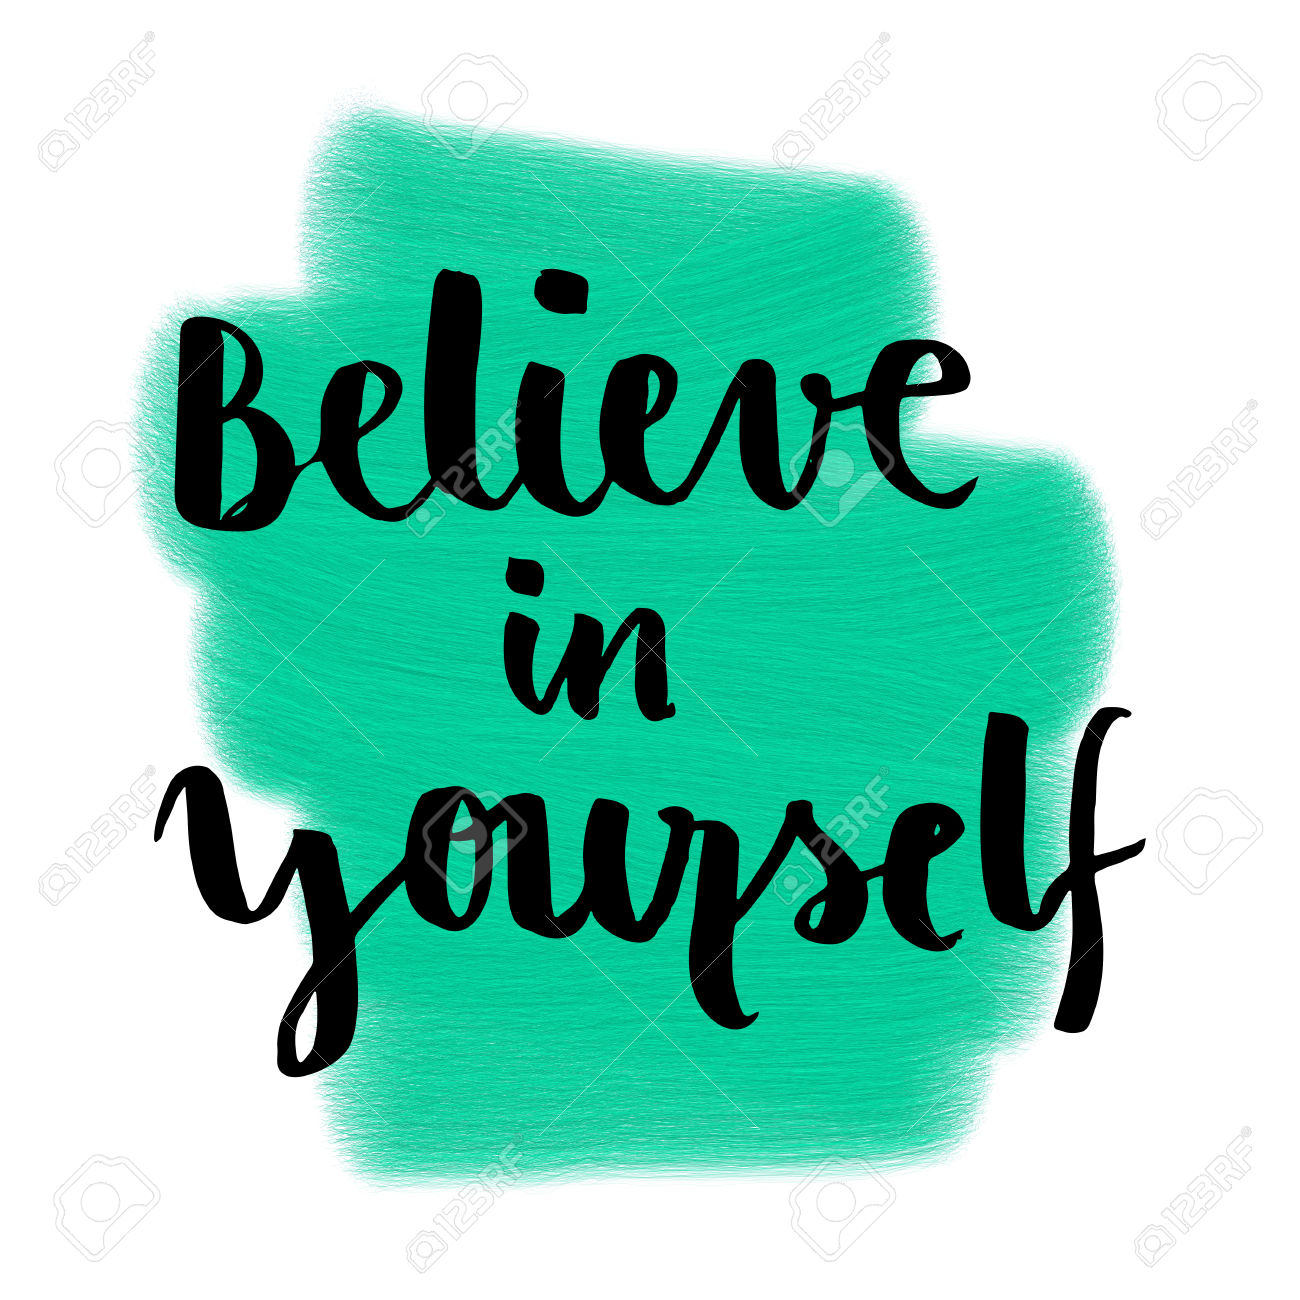 Because you believe. Believe in yourself картинки. Обои believe in yourself. Картинка belive in yur Salf. Литерра believe yourself.